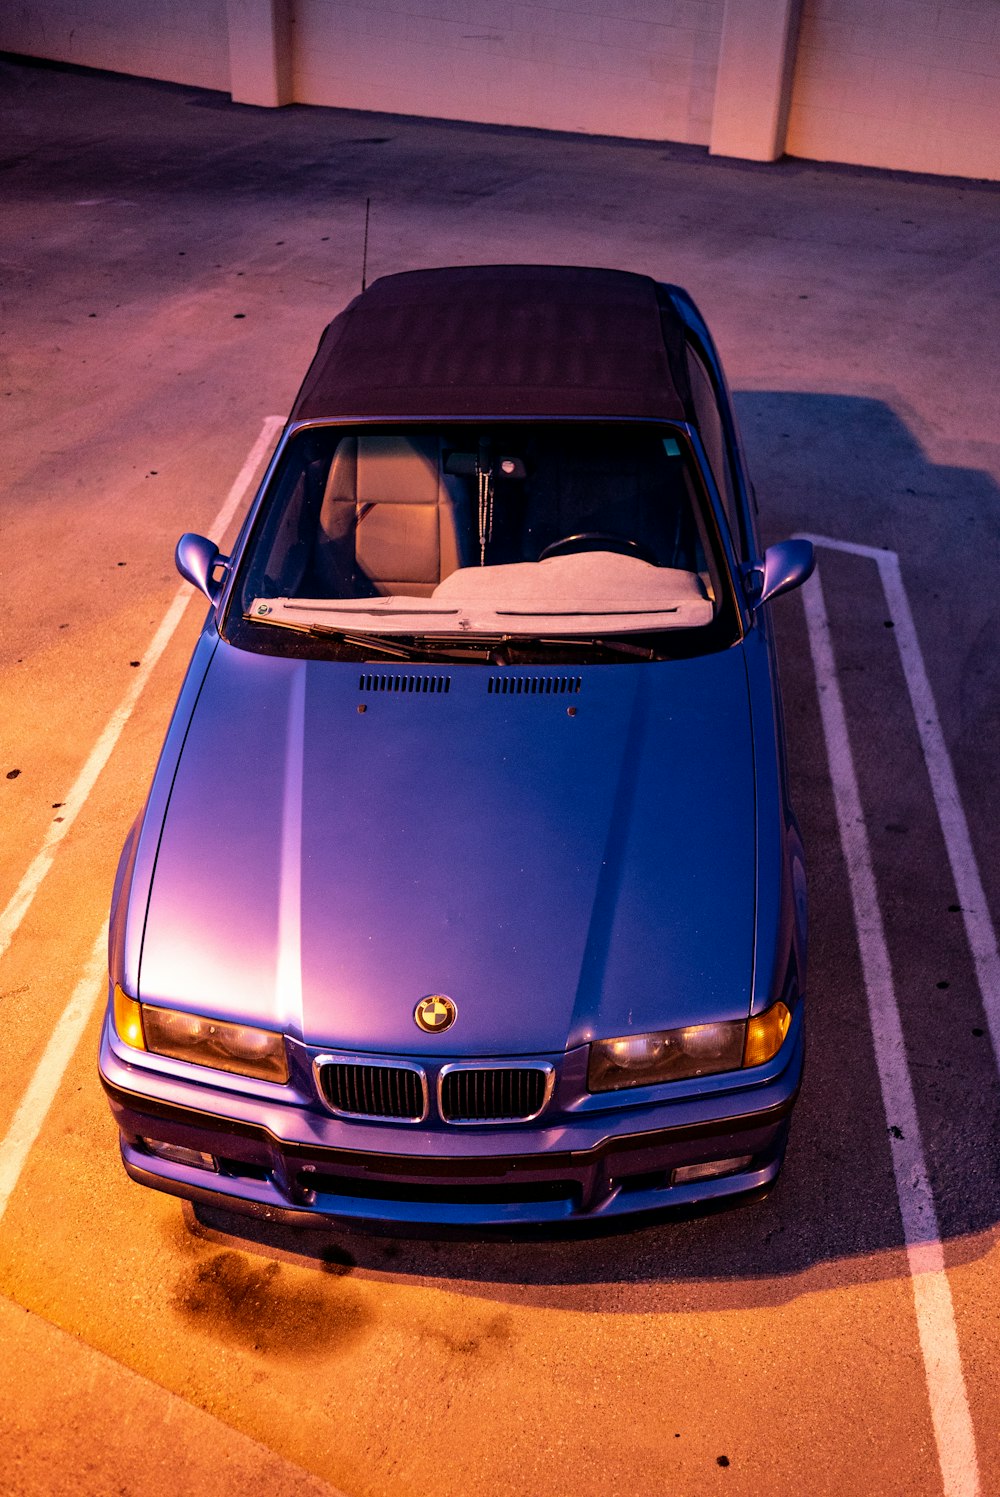 parked blue BMW sedan